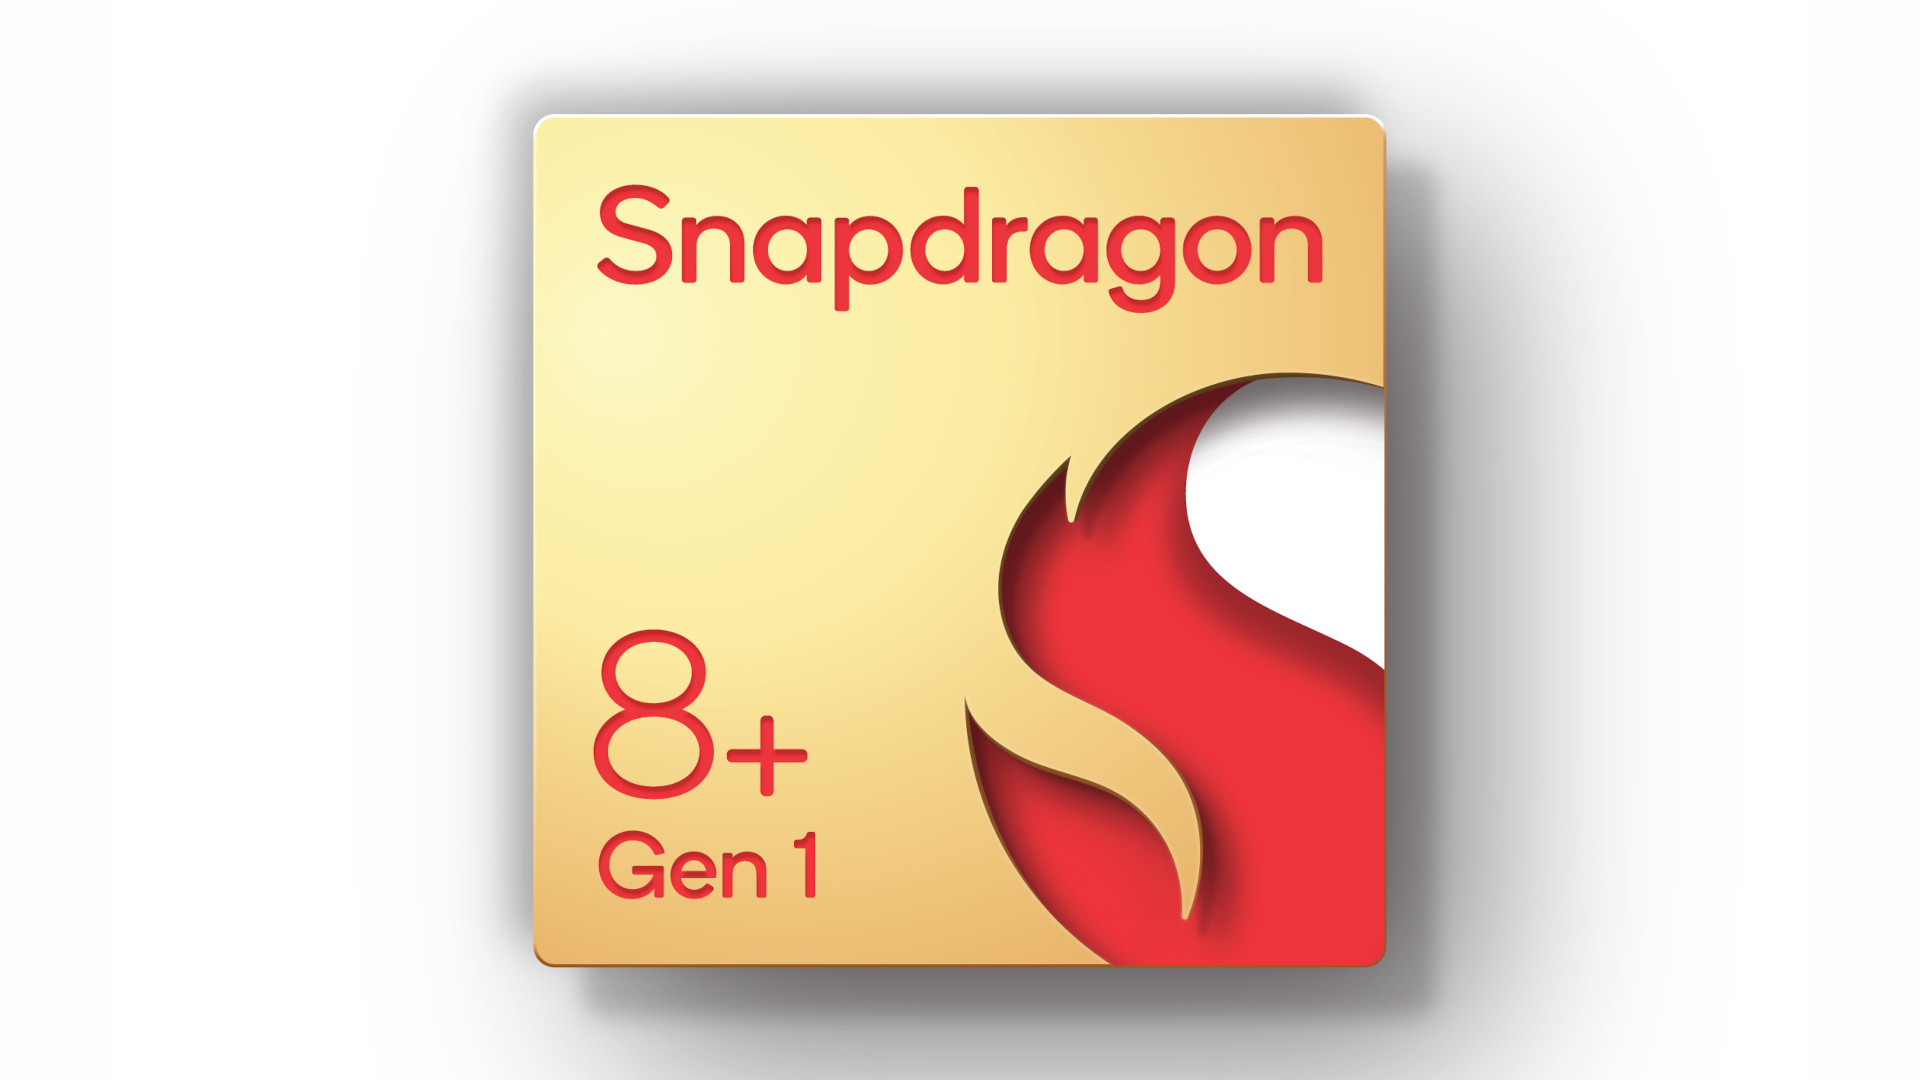 Qualcomm Snapdragon 8 Plus Gen 1 logo